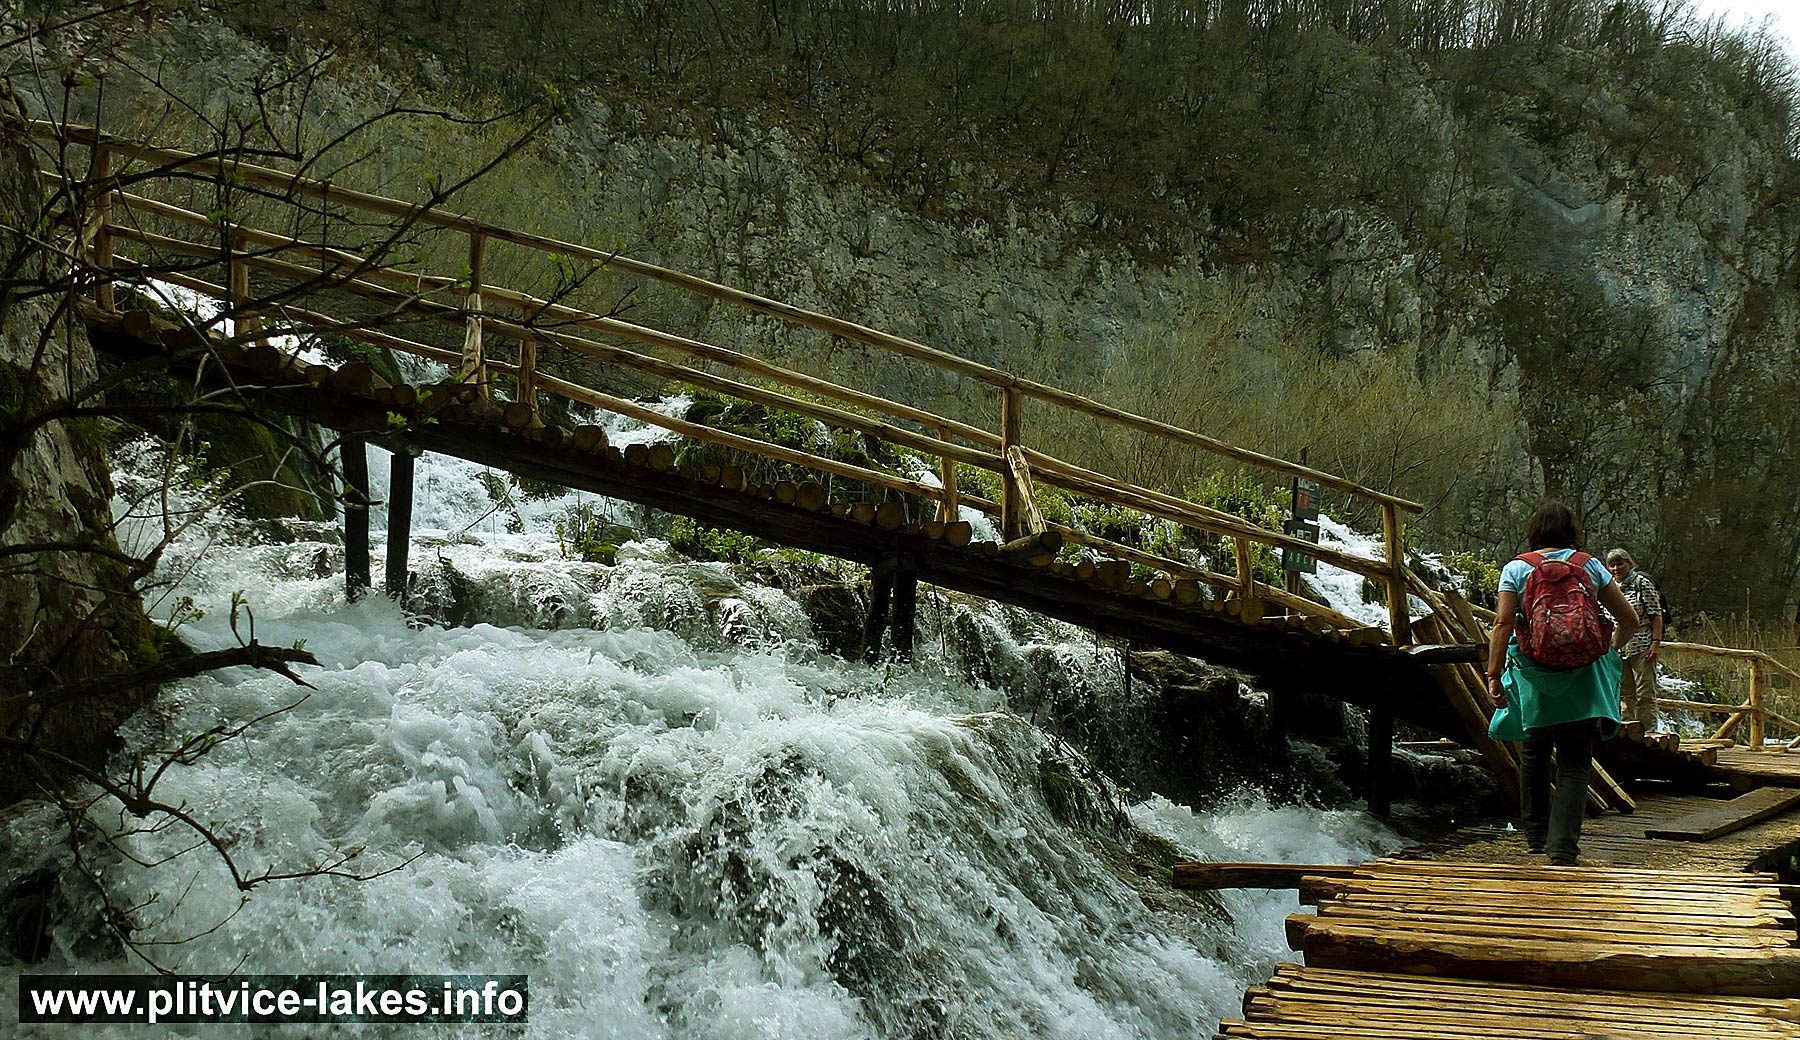 Crossing waterfalls at Plitvice Lakes